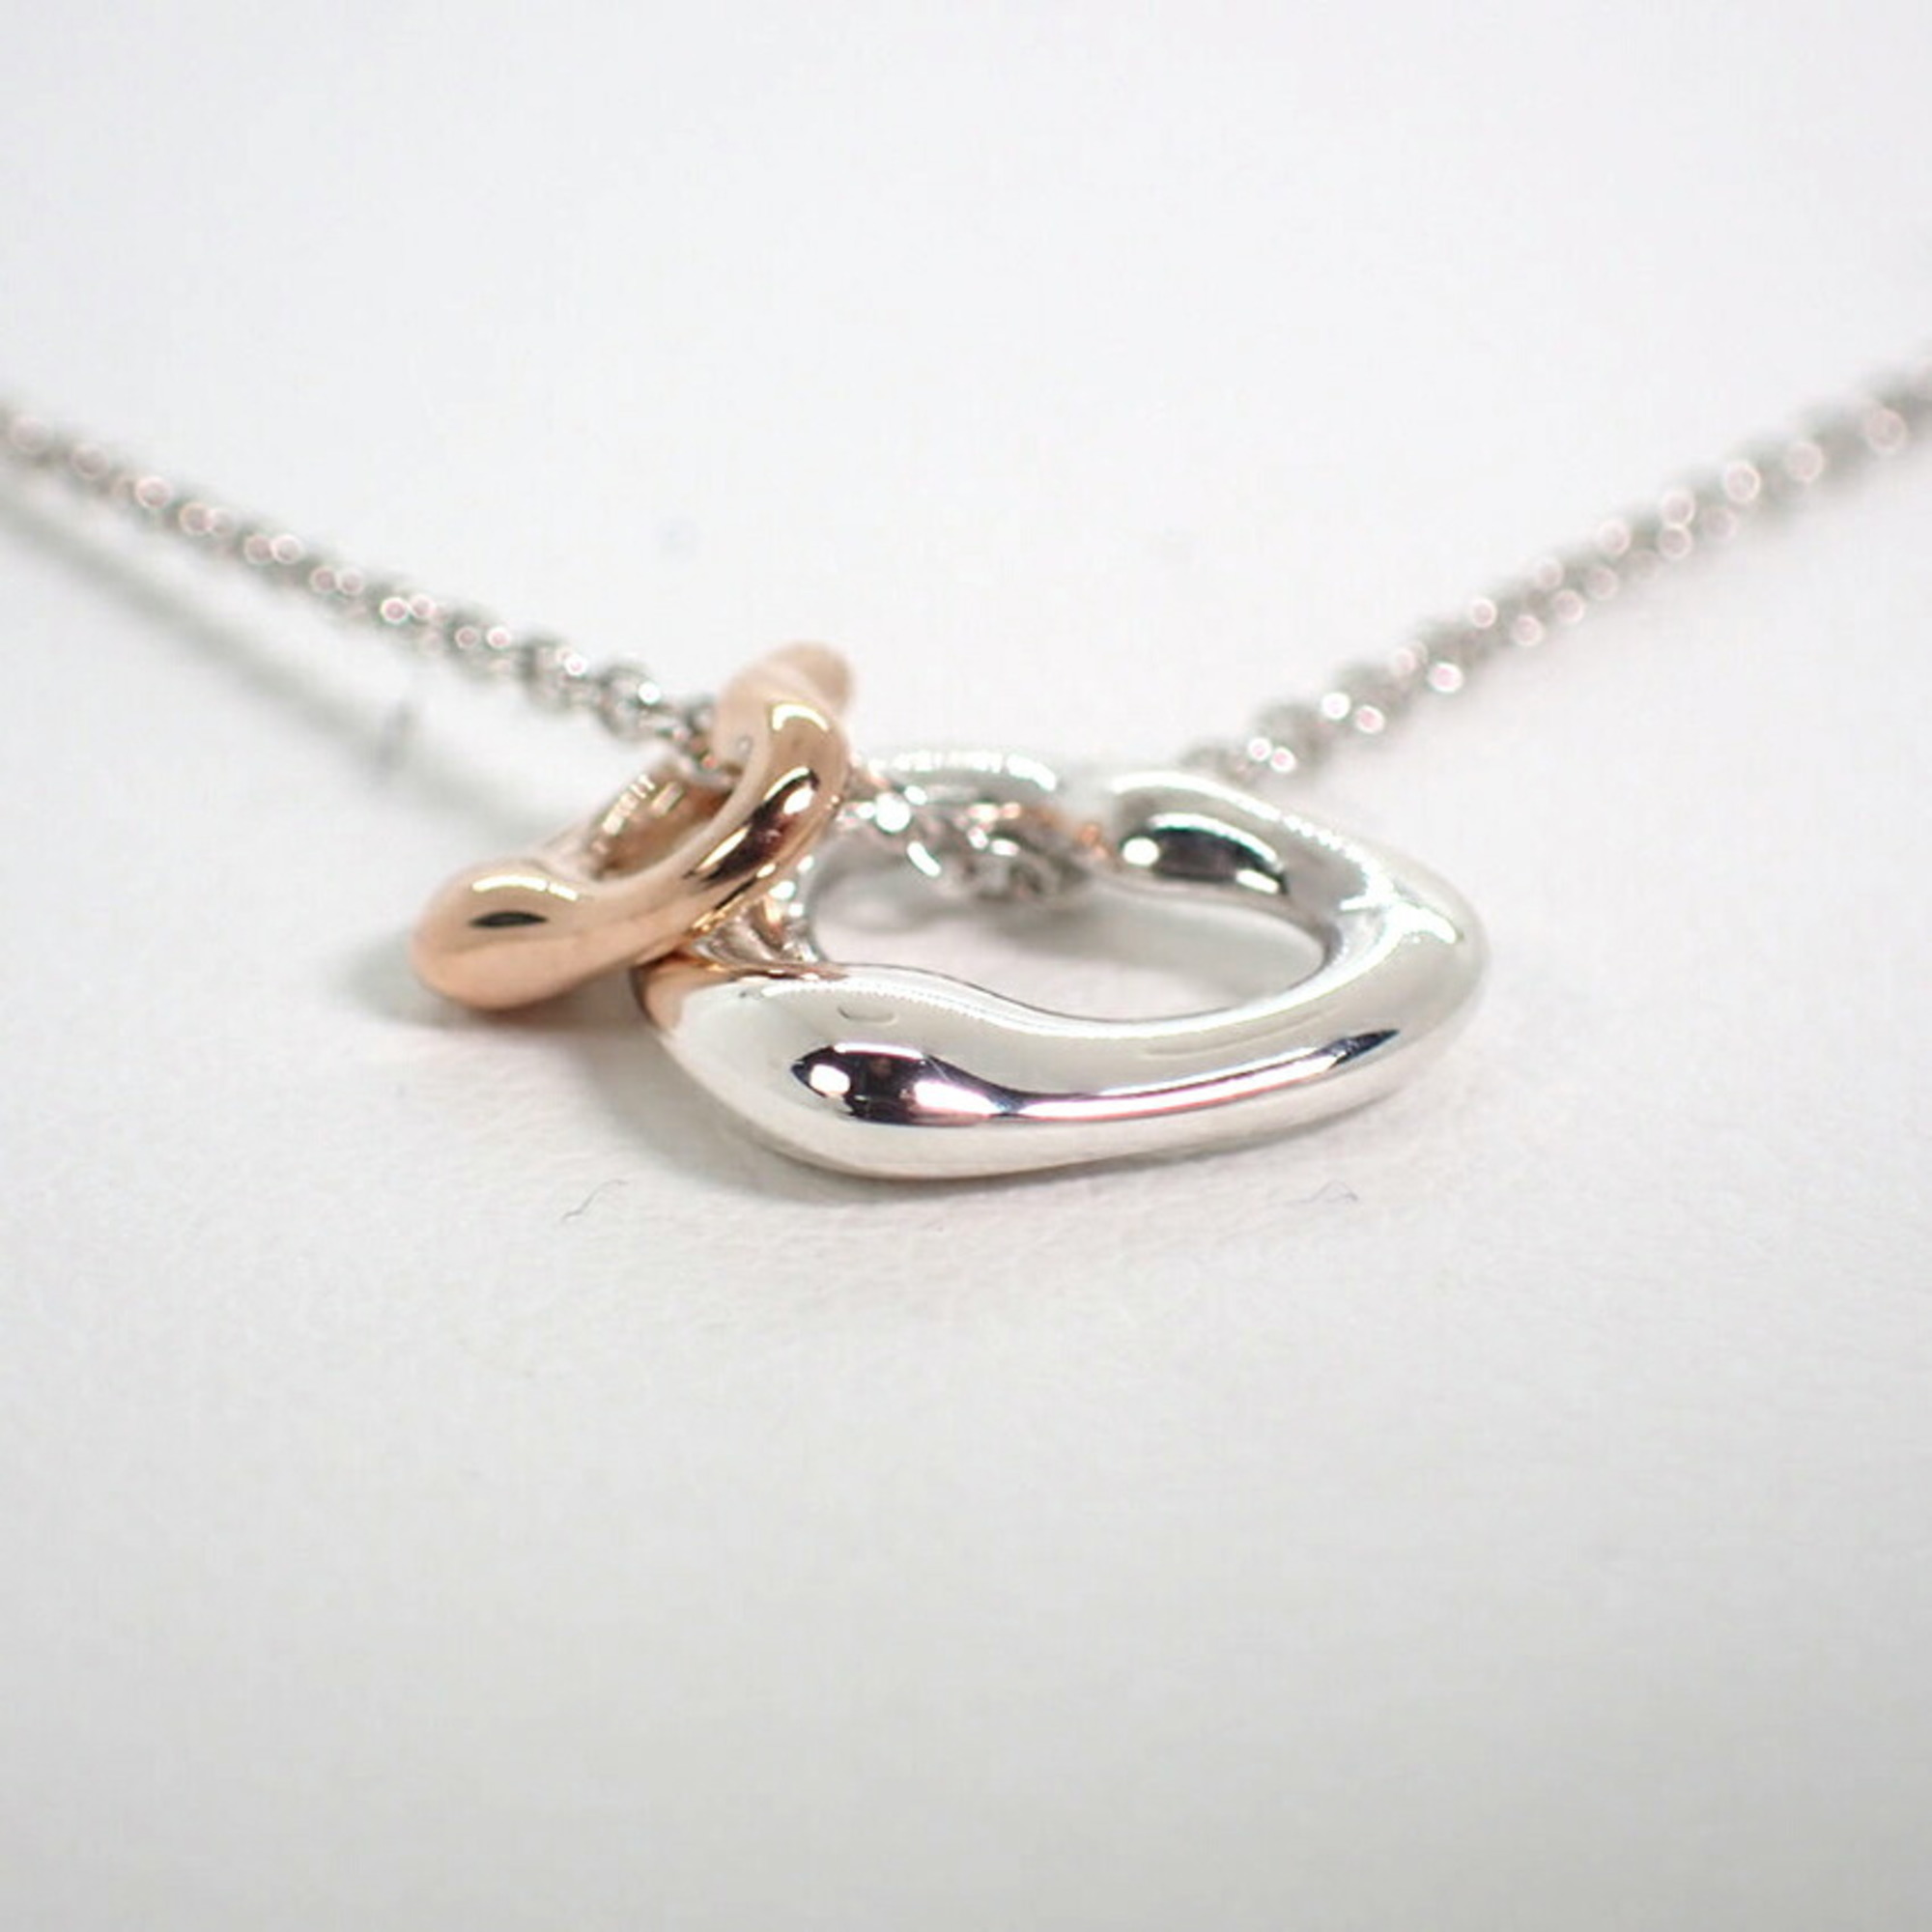 TIFFANY 925 750 double open heart pendant